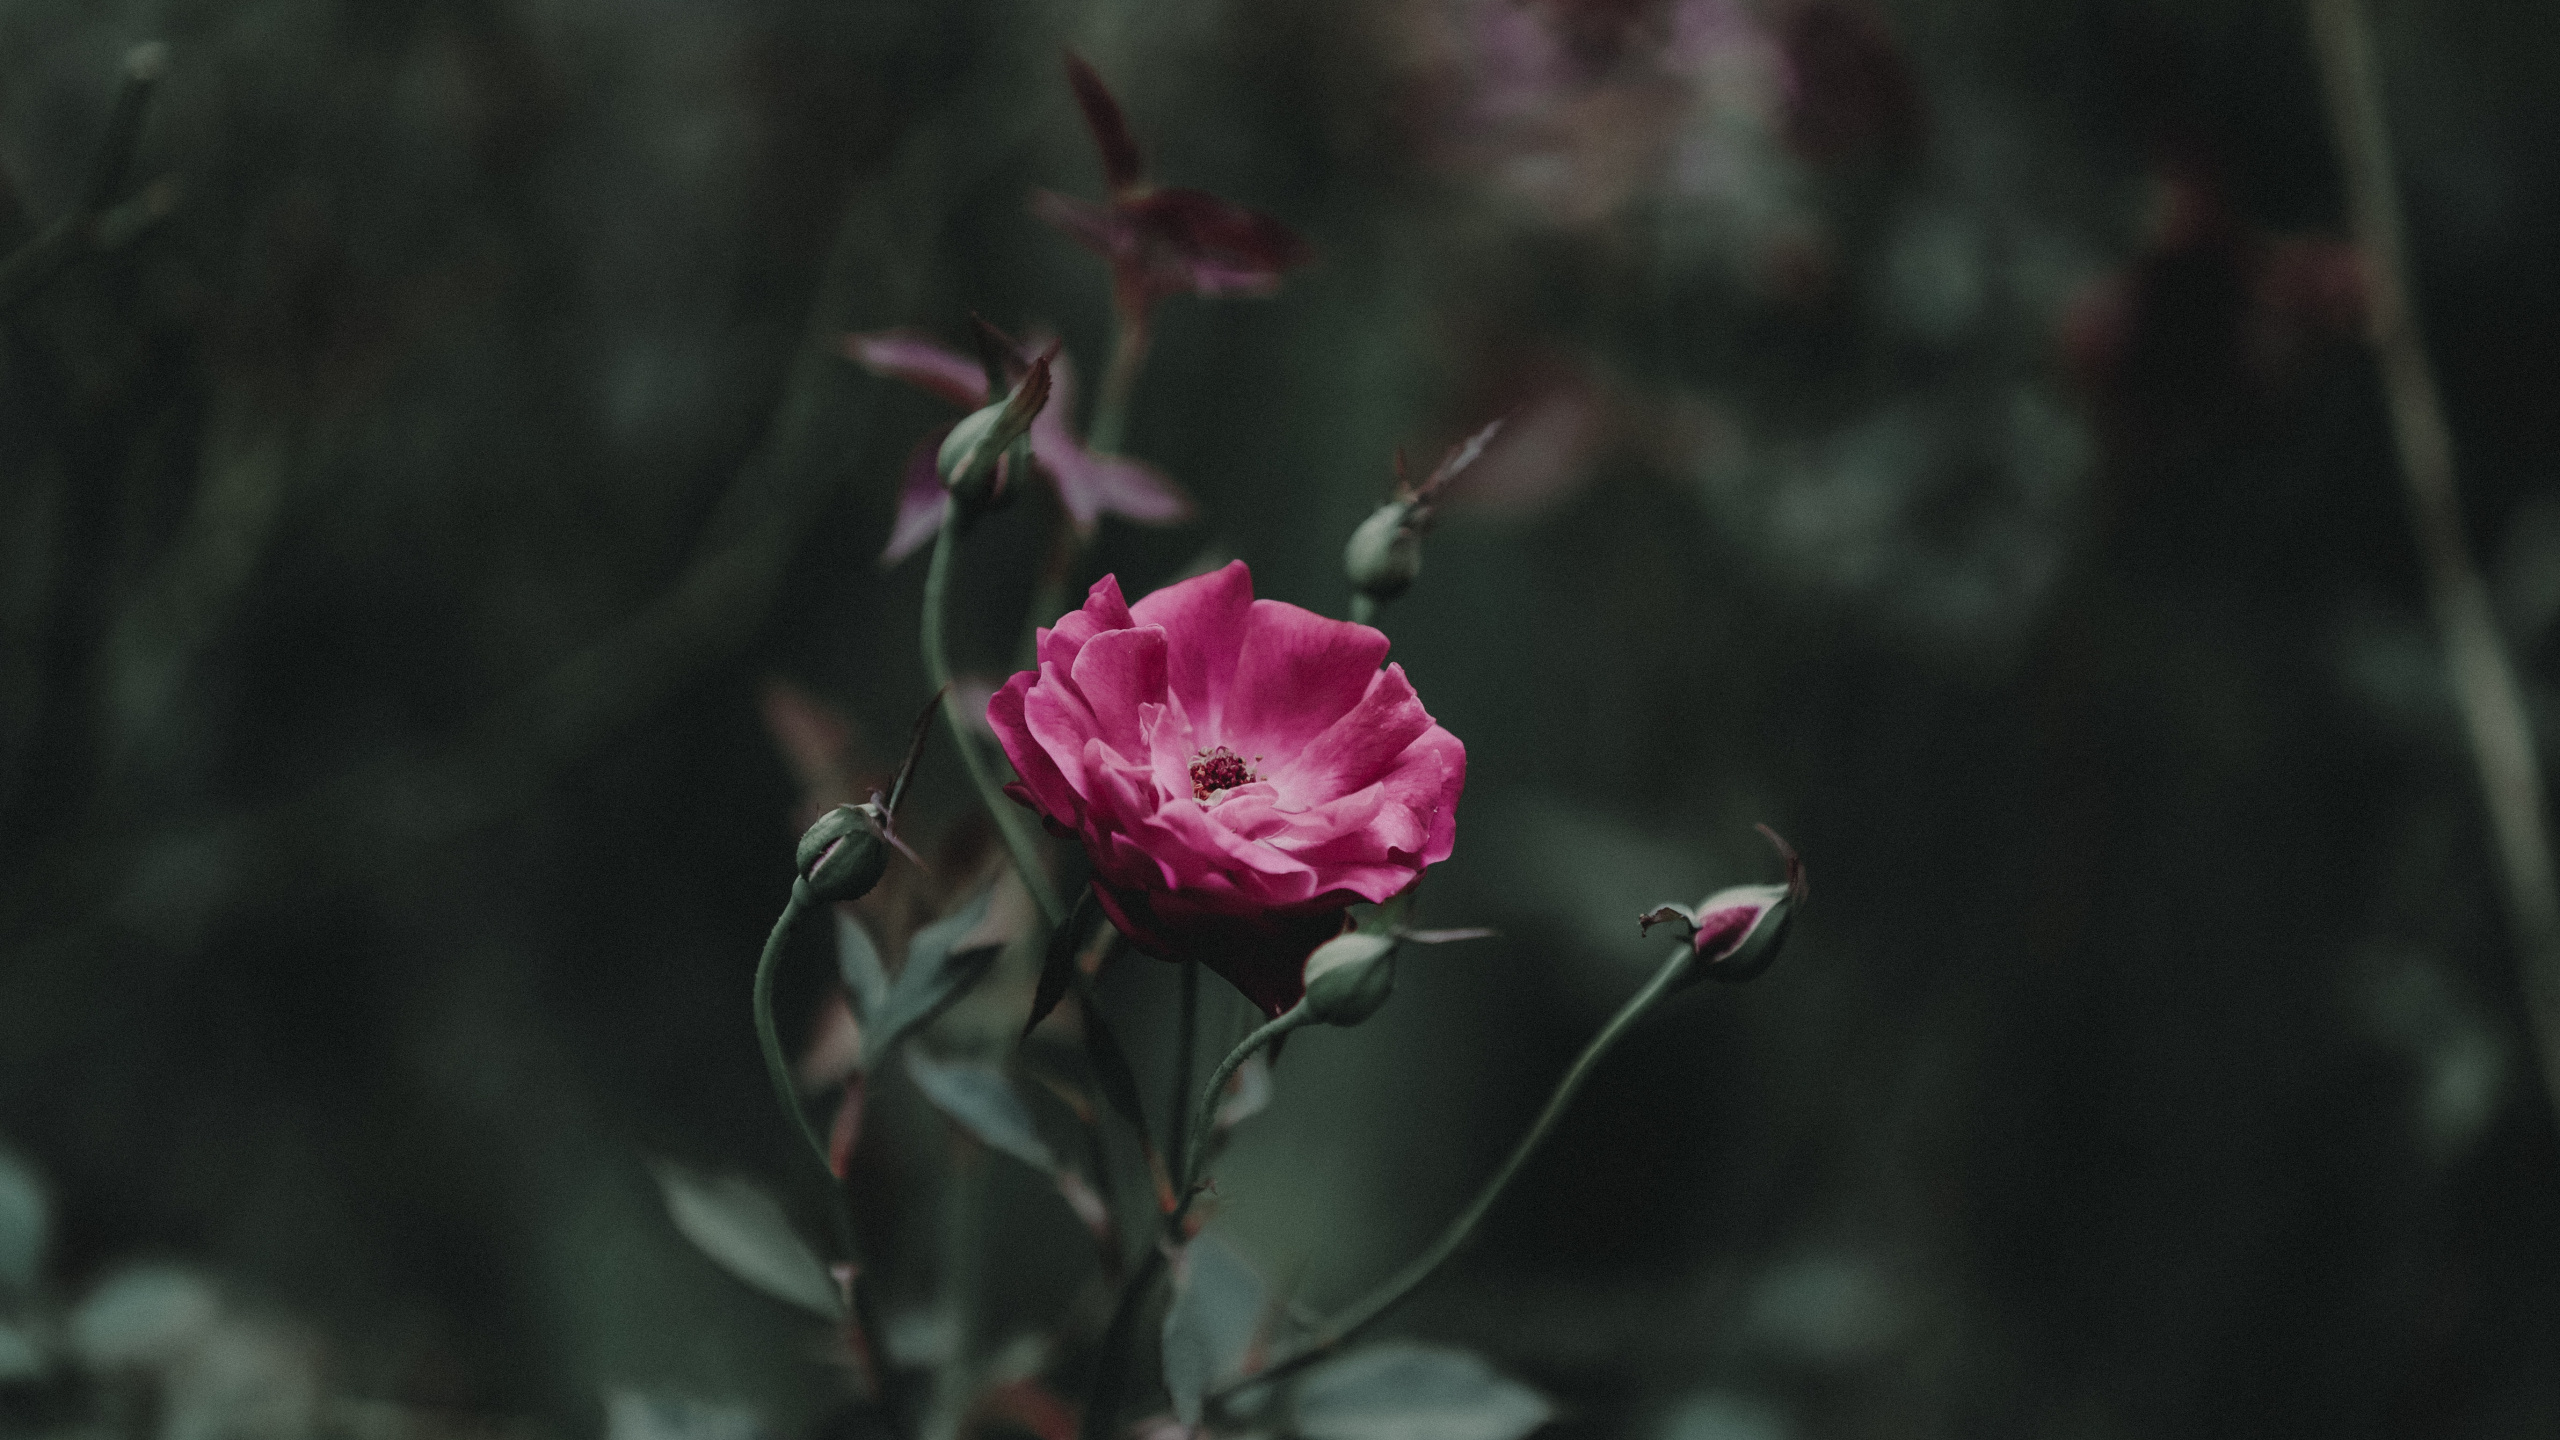 Rose Rose en Fleurs Pendant la Journée. Wallpaper in 2560x1440 Resolution